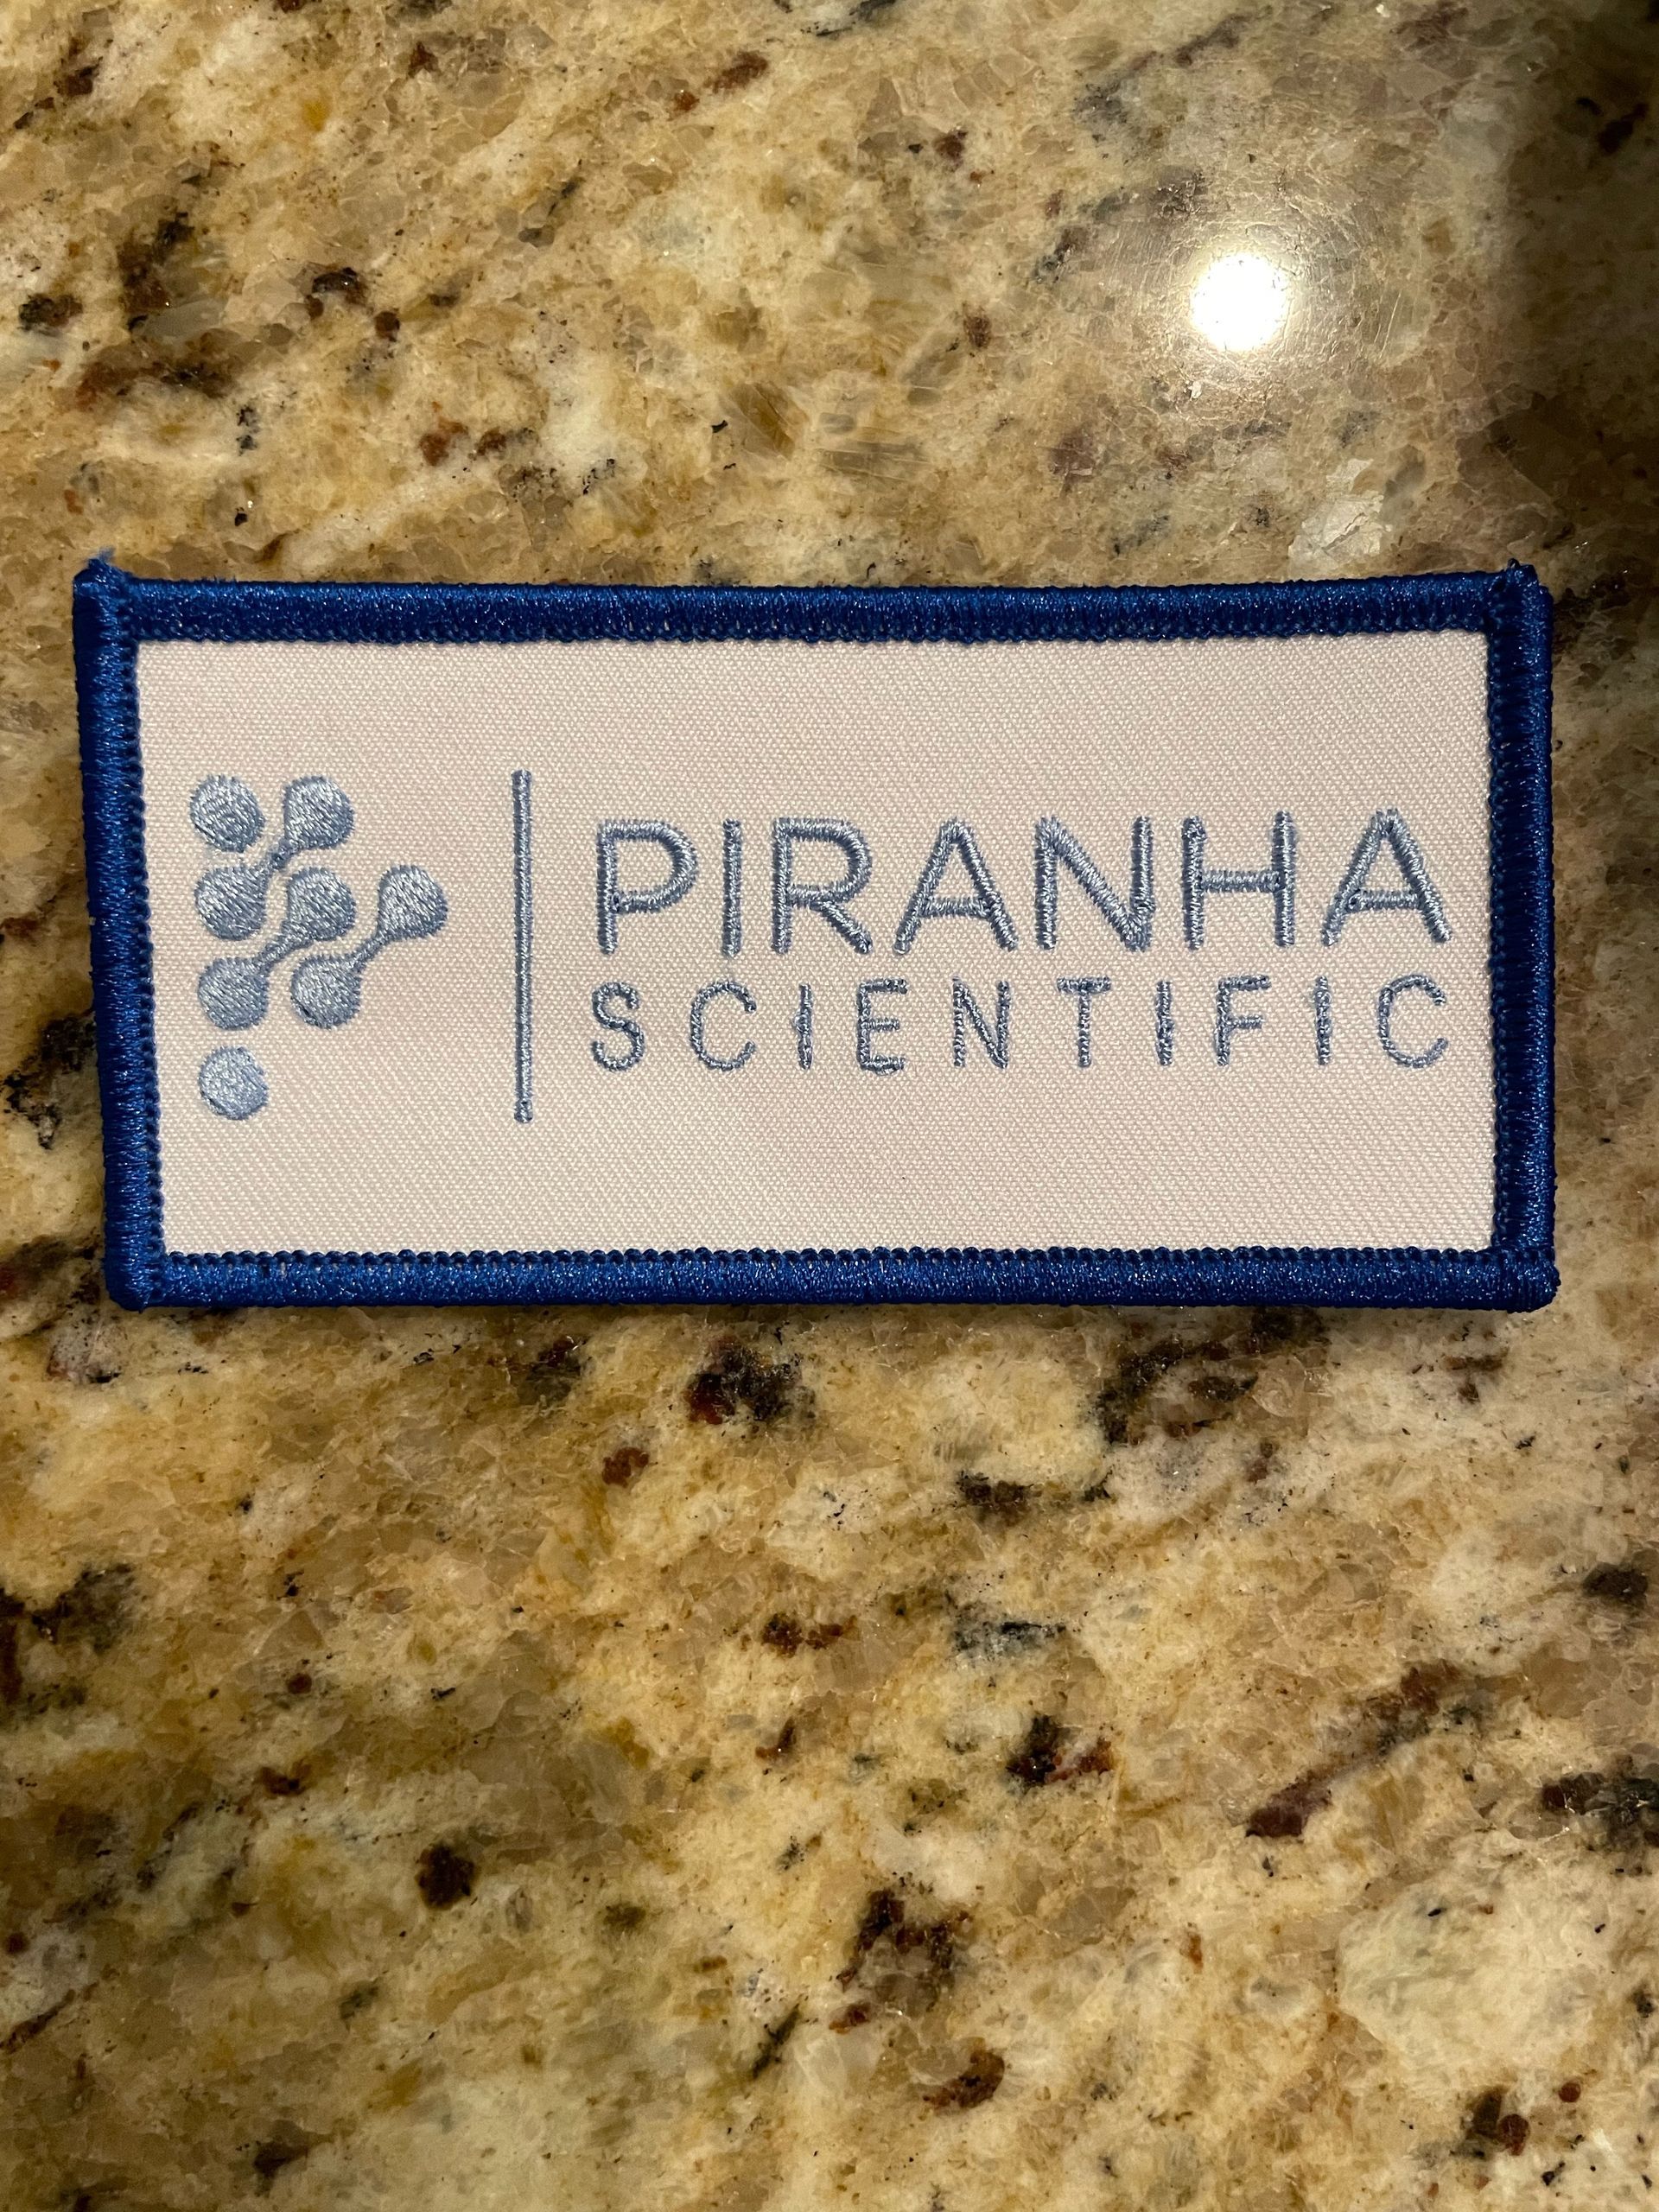 Piranha Scientific embroided logo